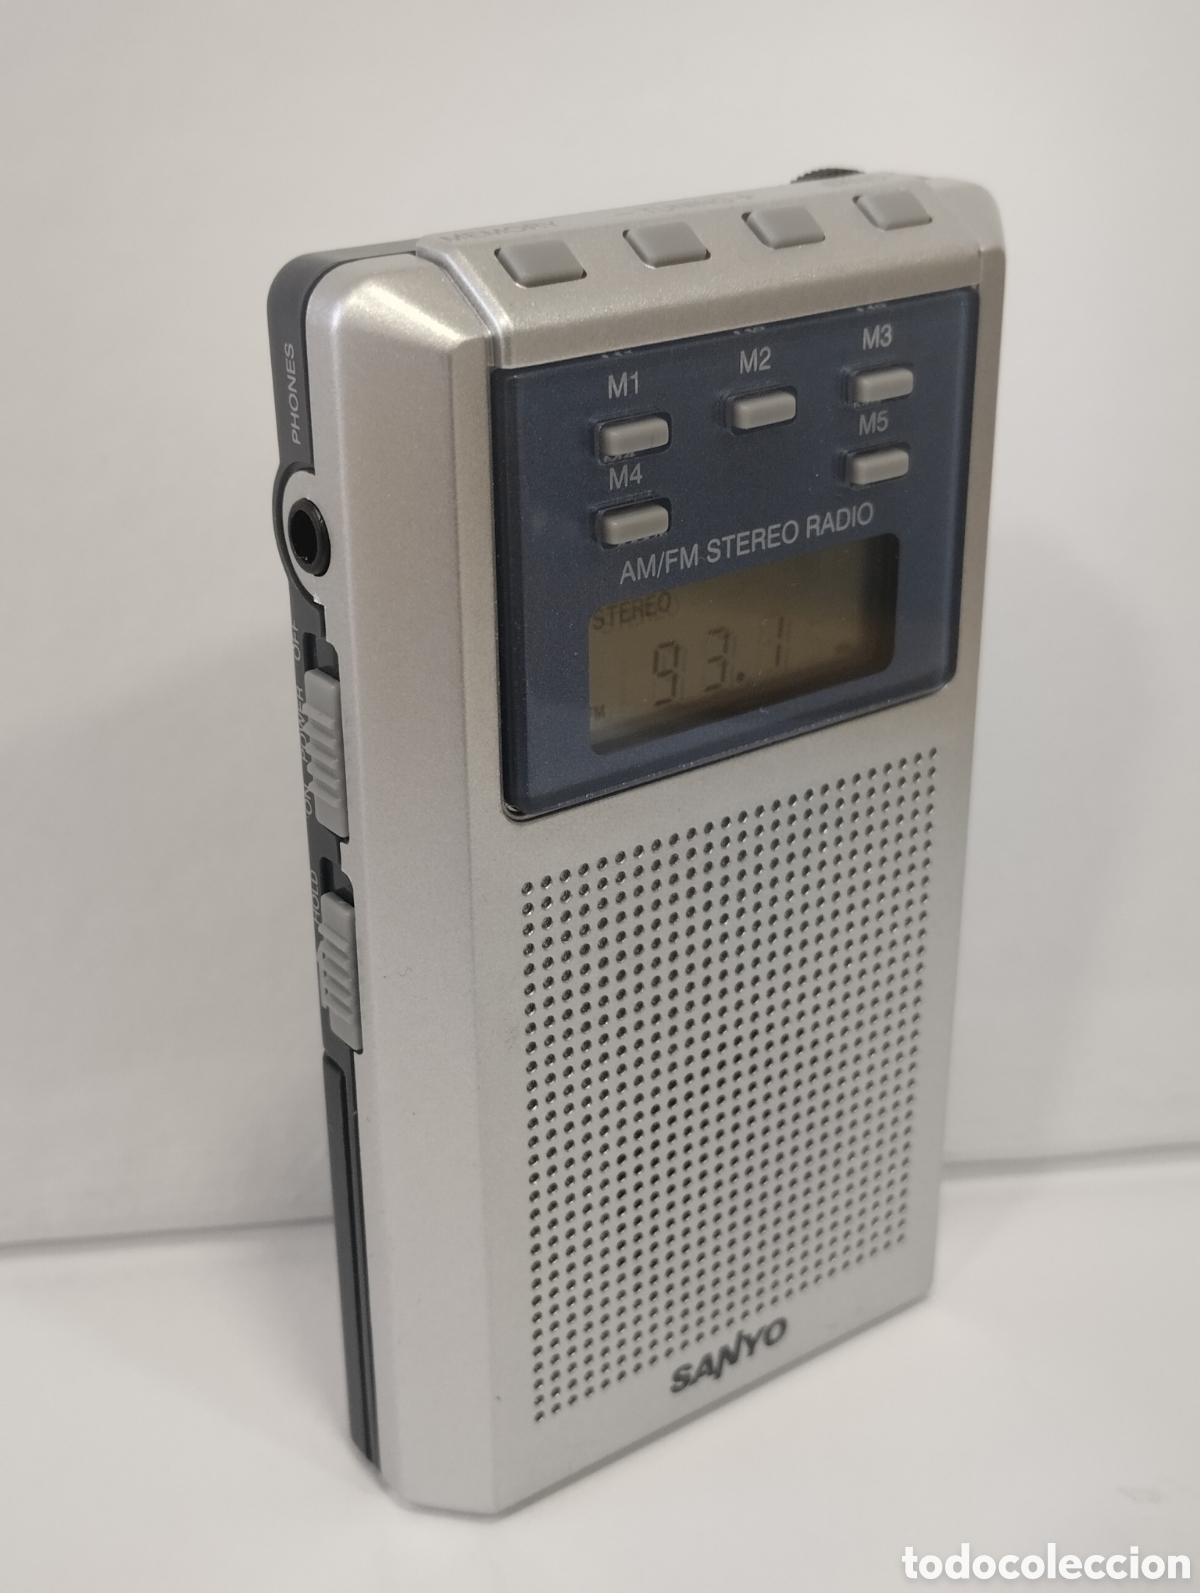 SANYO Radio Analogica Am/fm Borde Madera con Bateria Recargable KS114 -  Guanxe Atlantic Marketplace